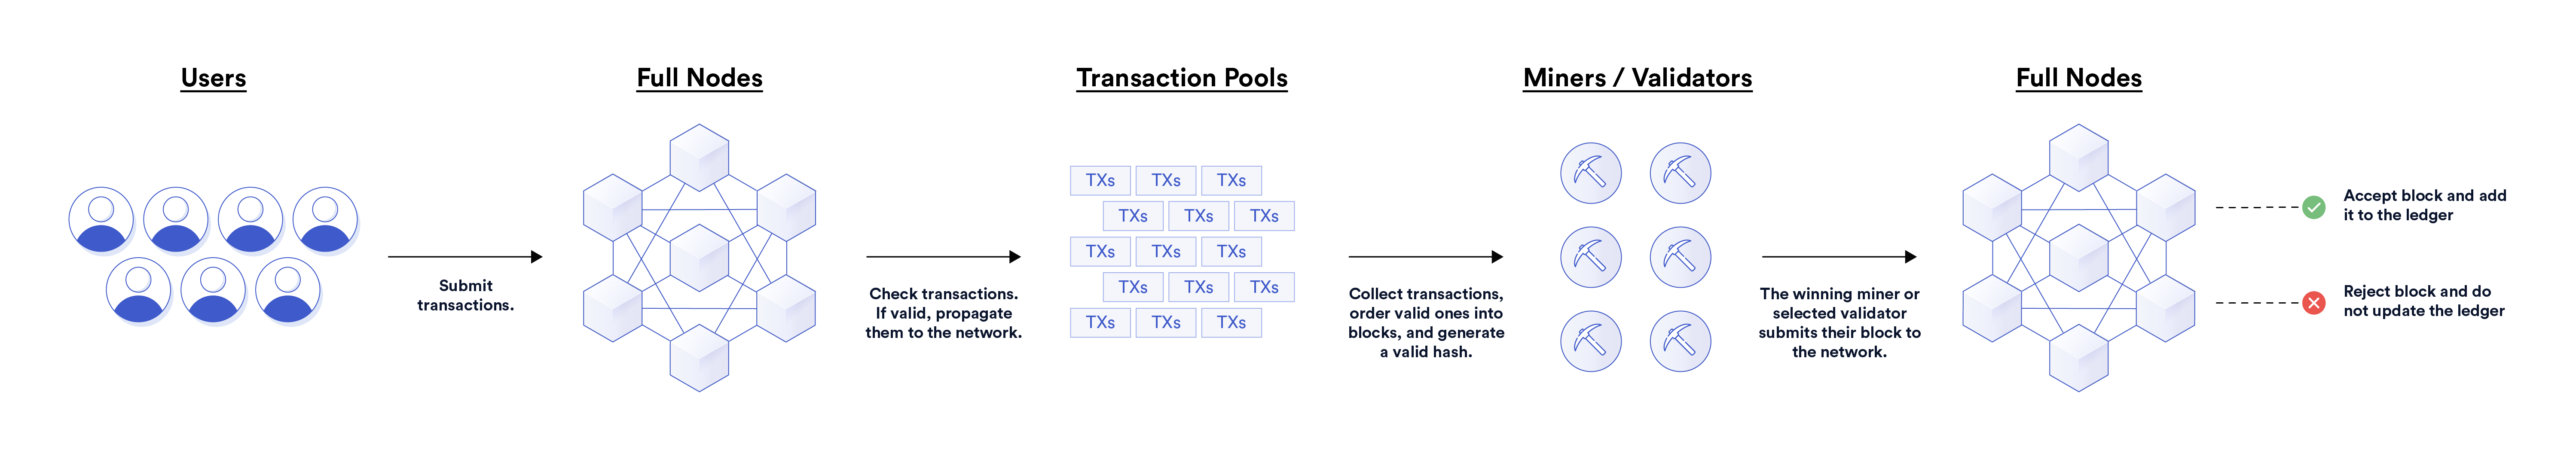 Blockchain full nodes, miners, and validators